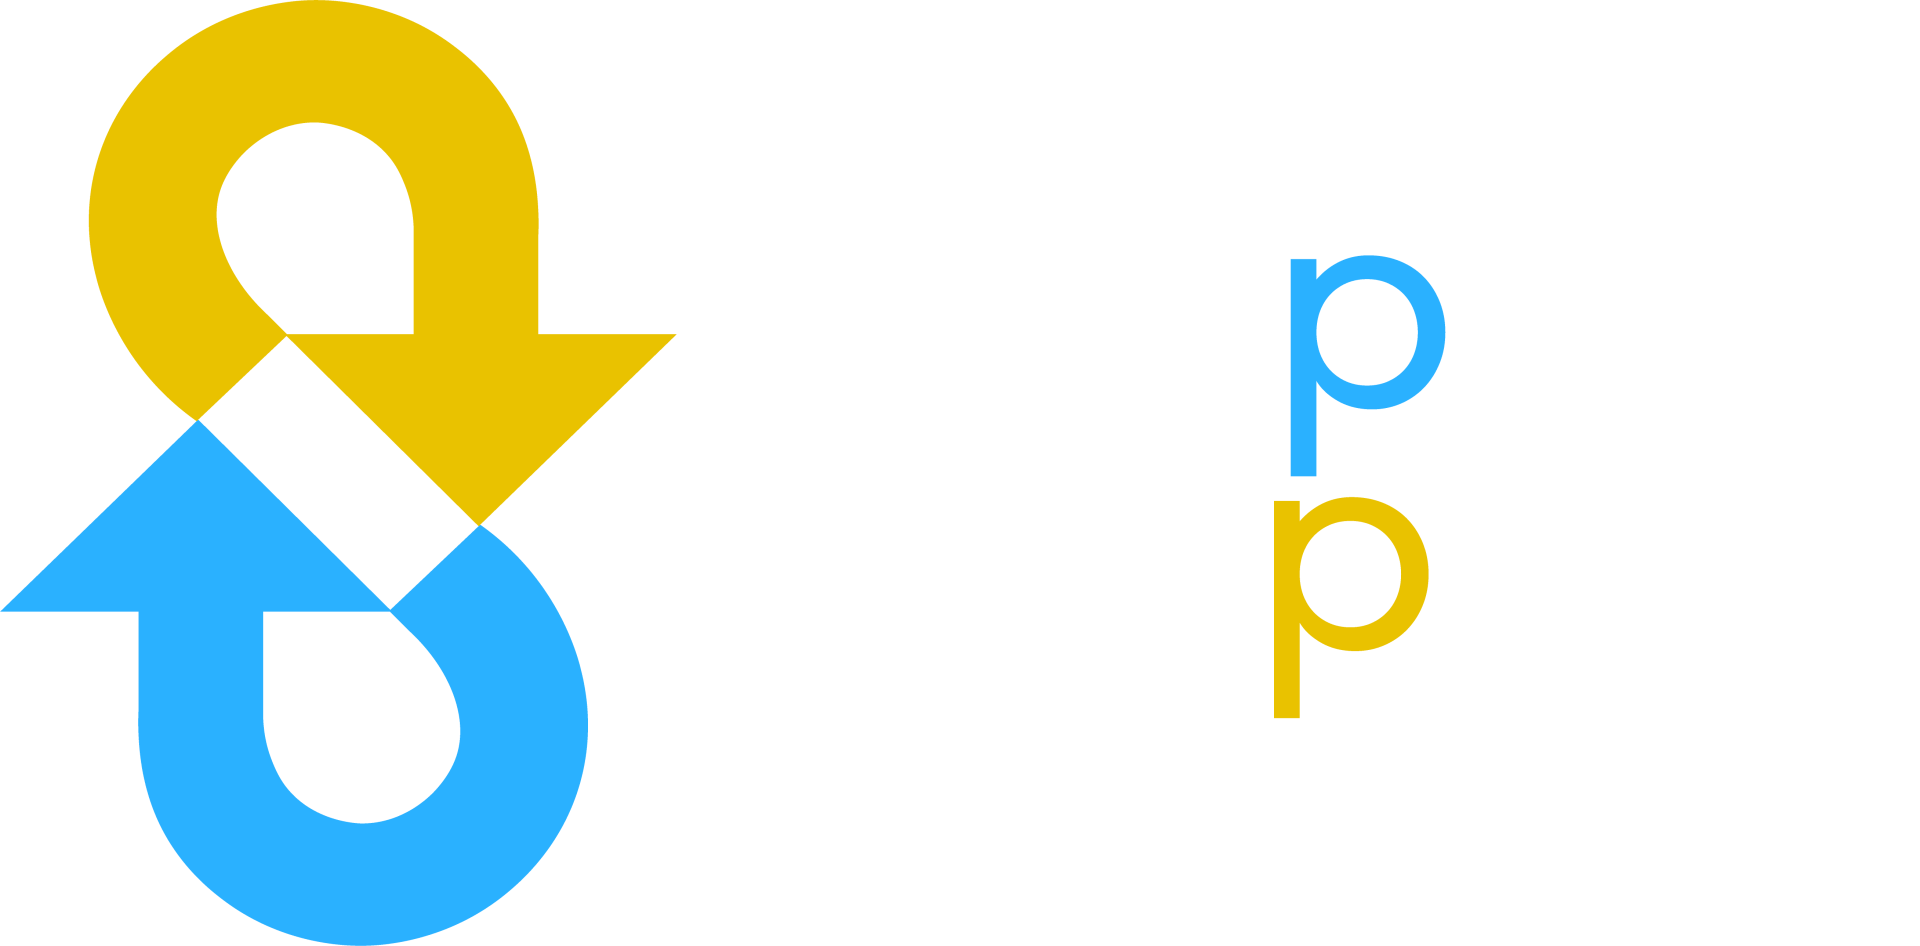 Swap.coupons